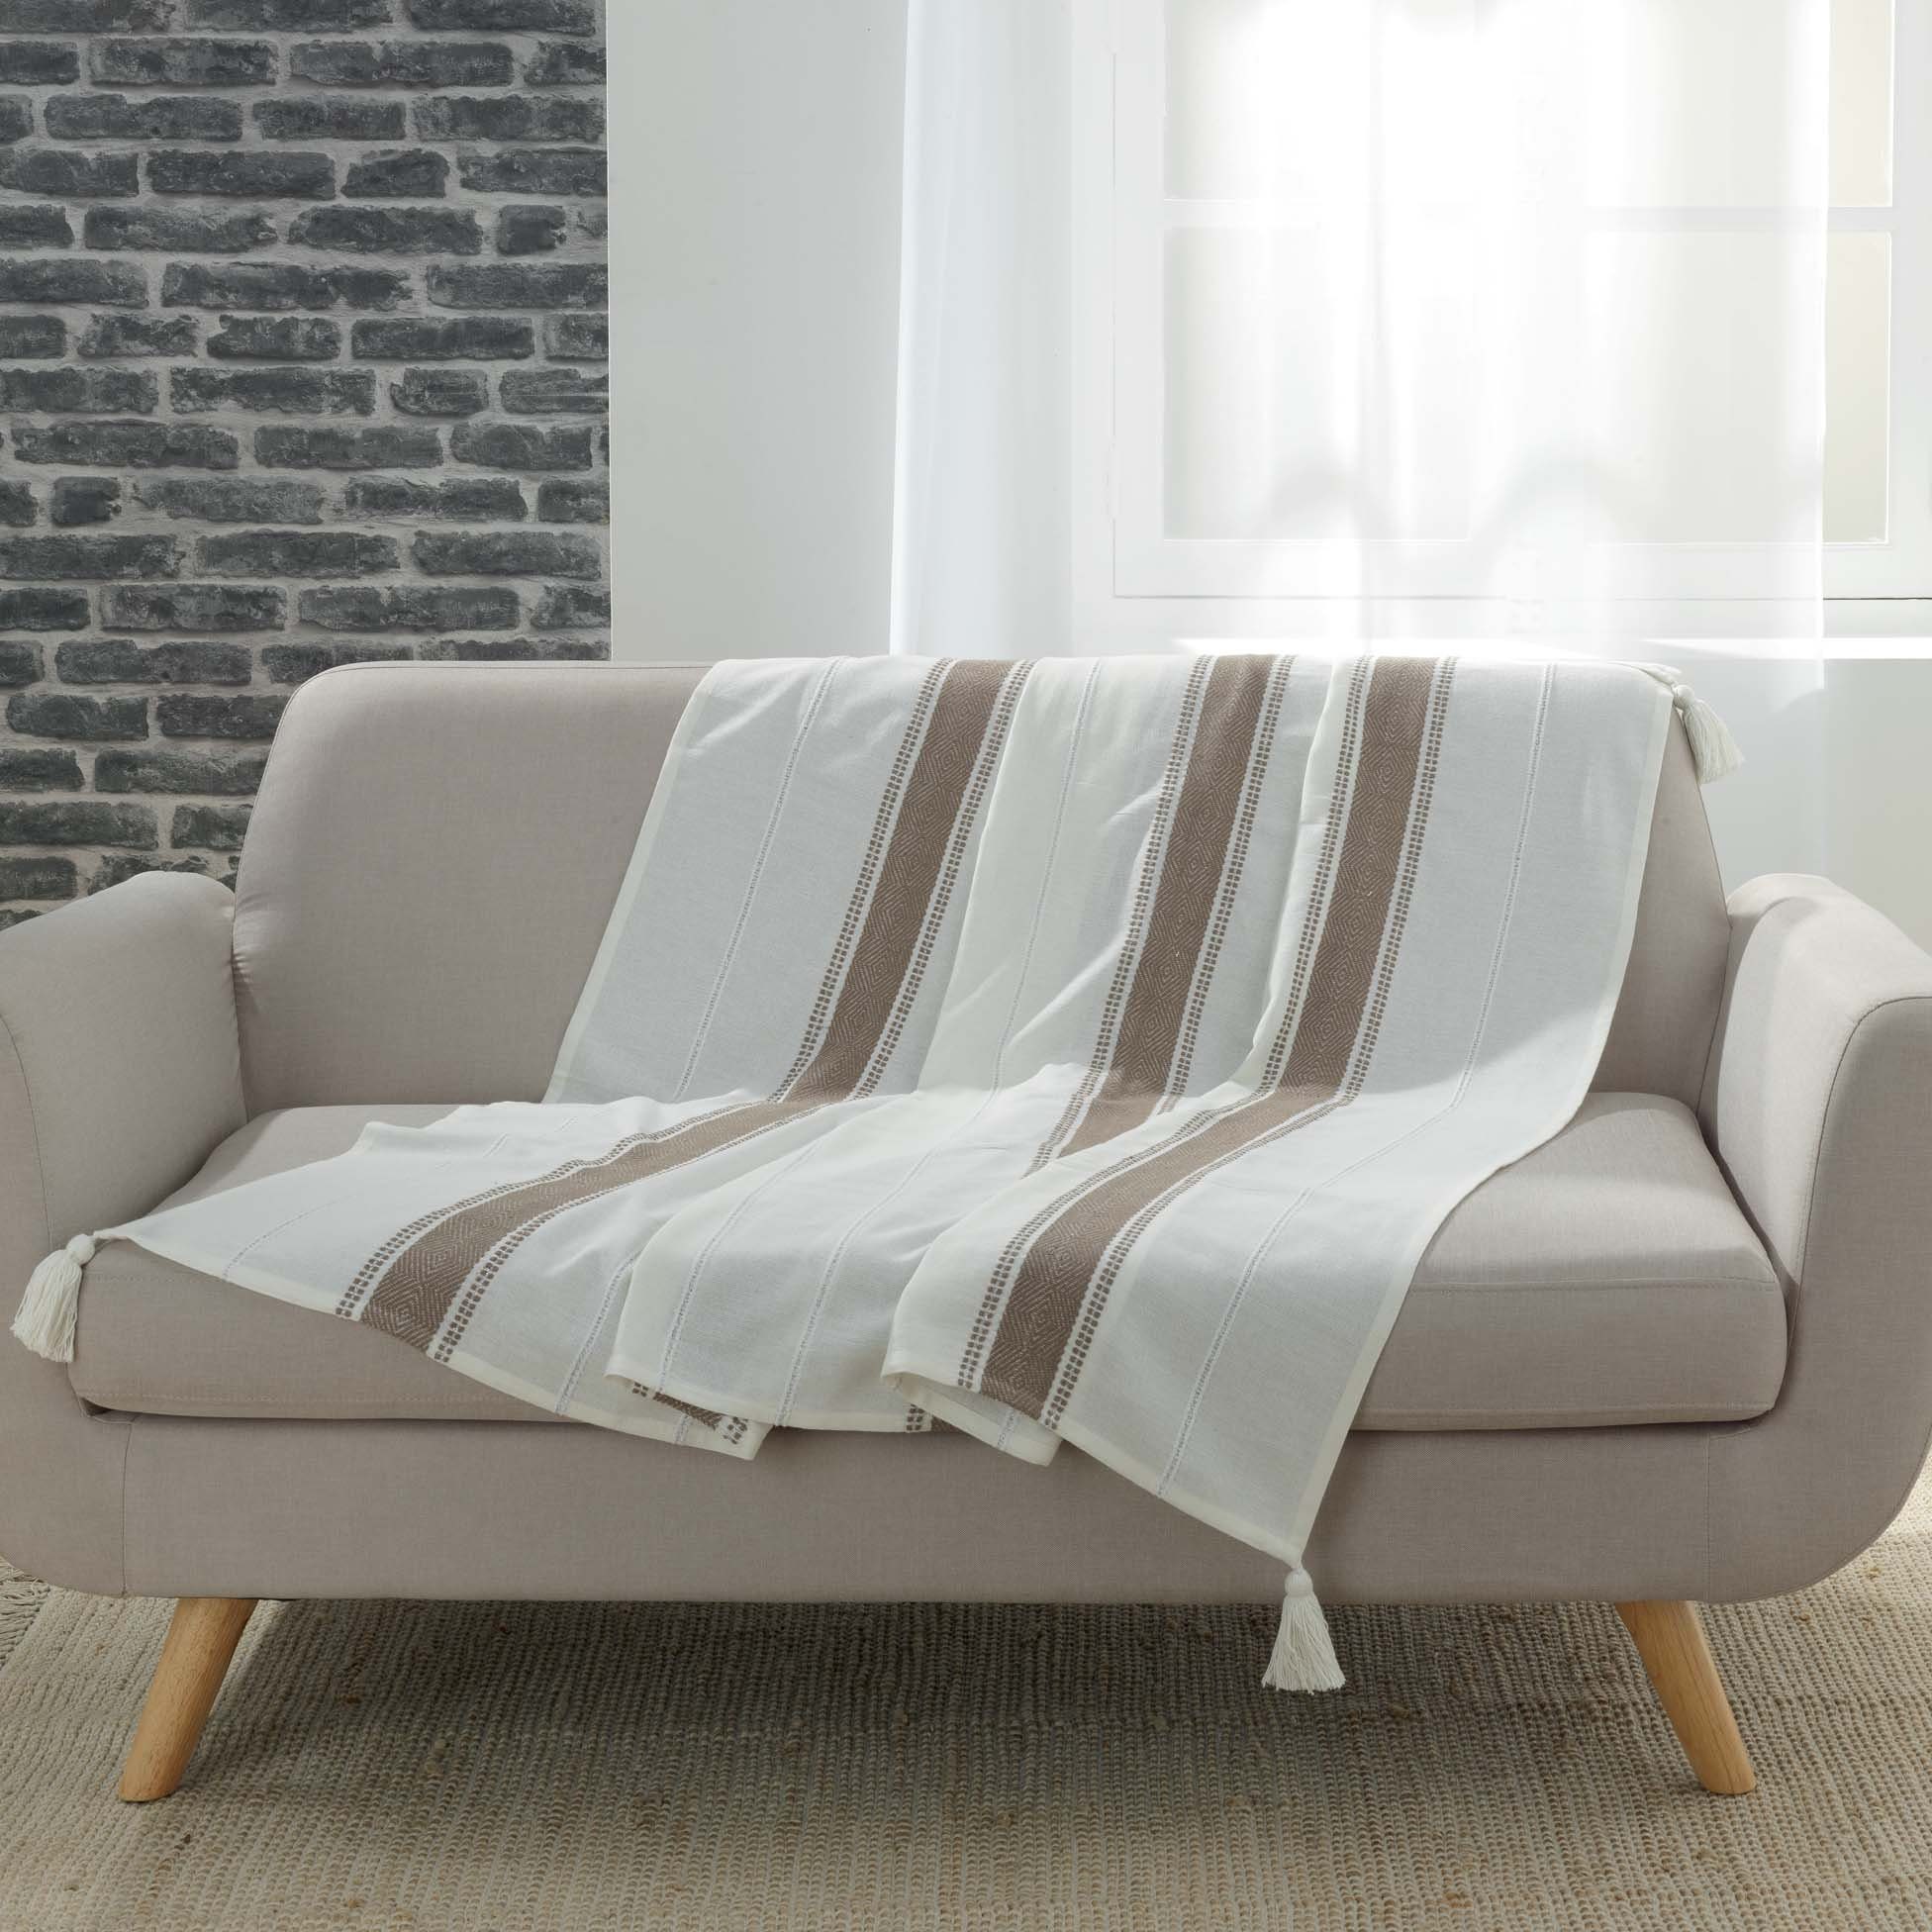 Tagesdecke, dynamic24, Baumwolle Wohndecke 125x150 Kuscheldecke Sofa Couch Decke Überwurf